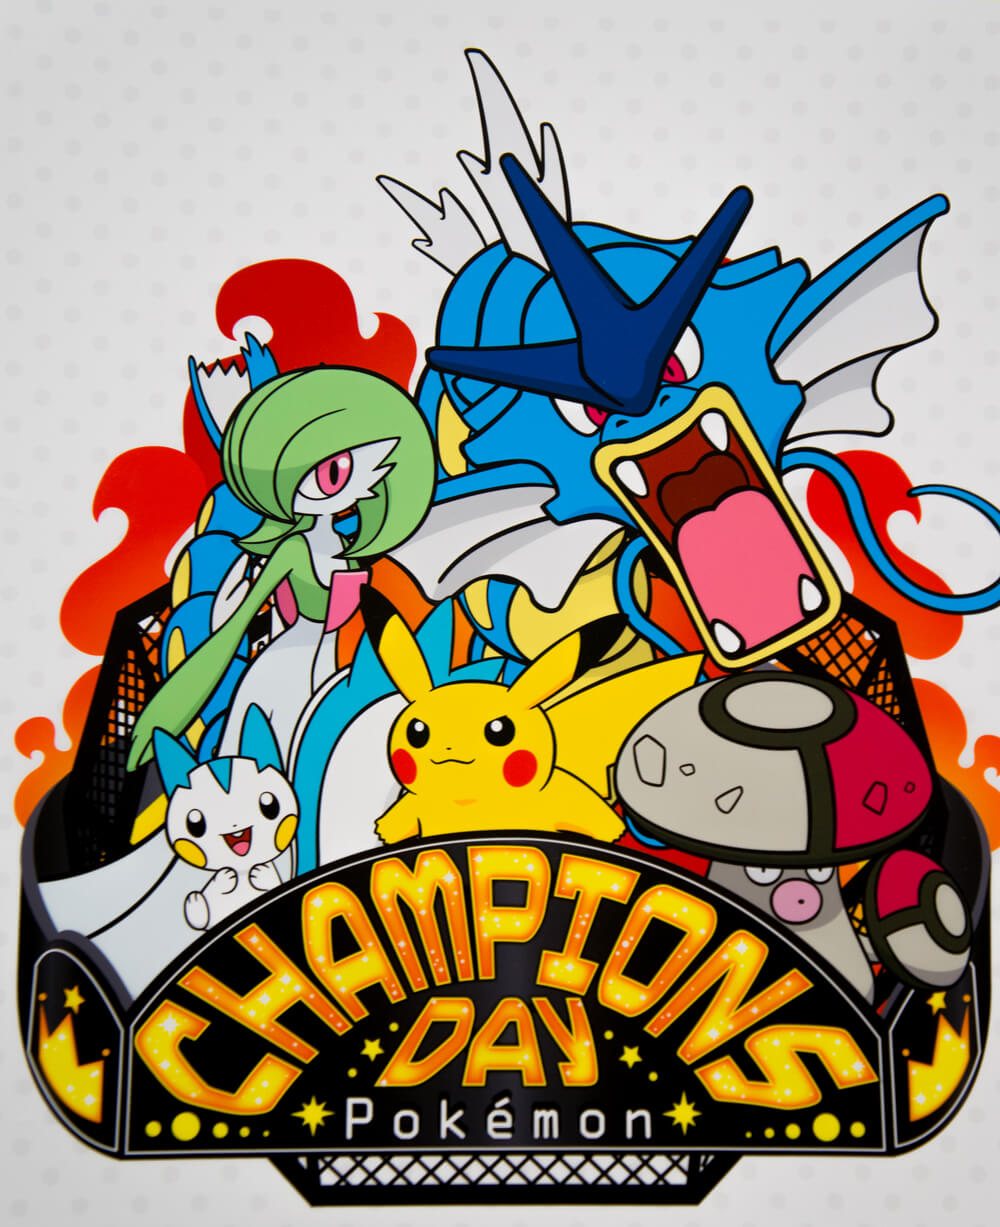 Pokemon Champions Day